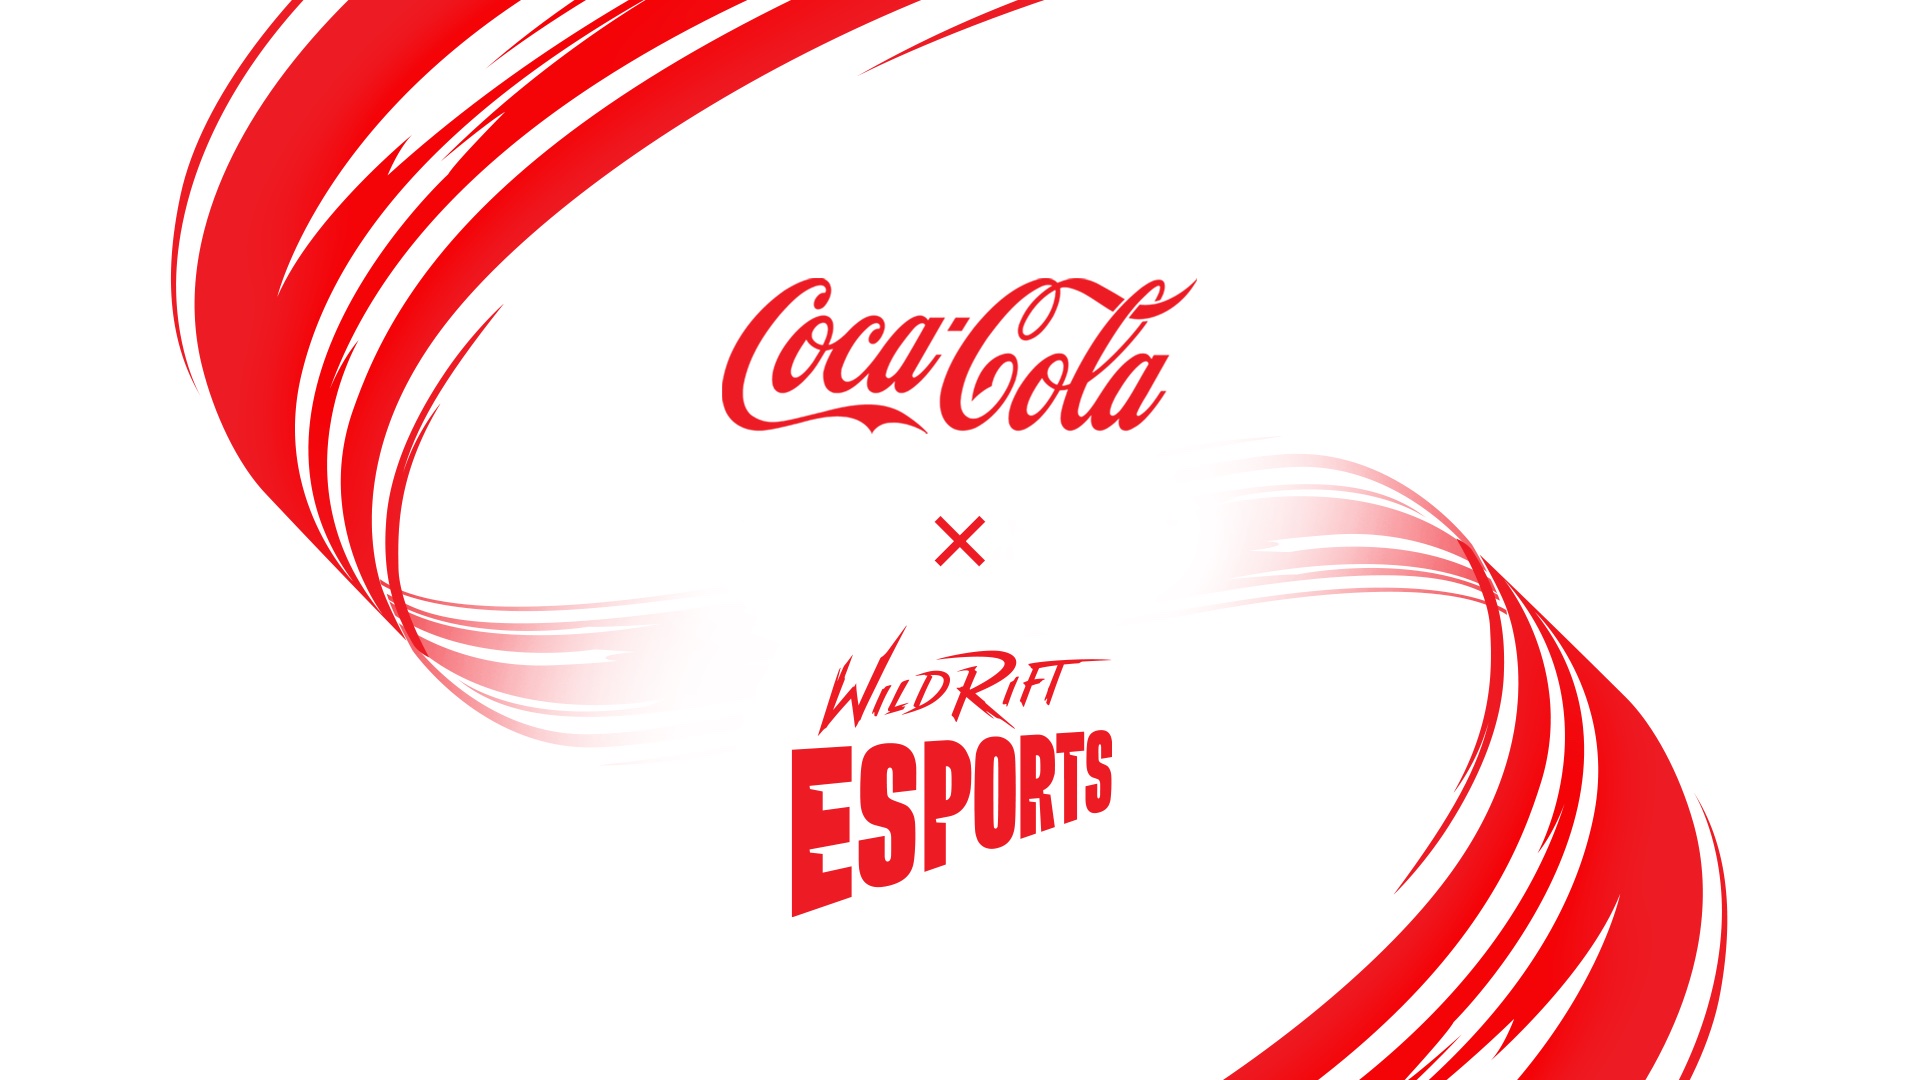 Wild Rift Esports Merangkul Coca-Cola sebagai Mitra Pendiri di Seluruh Dunia